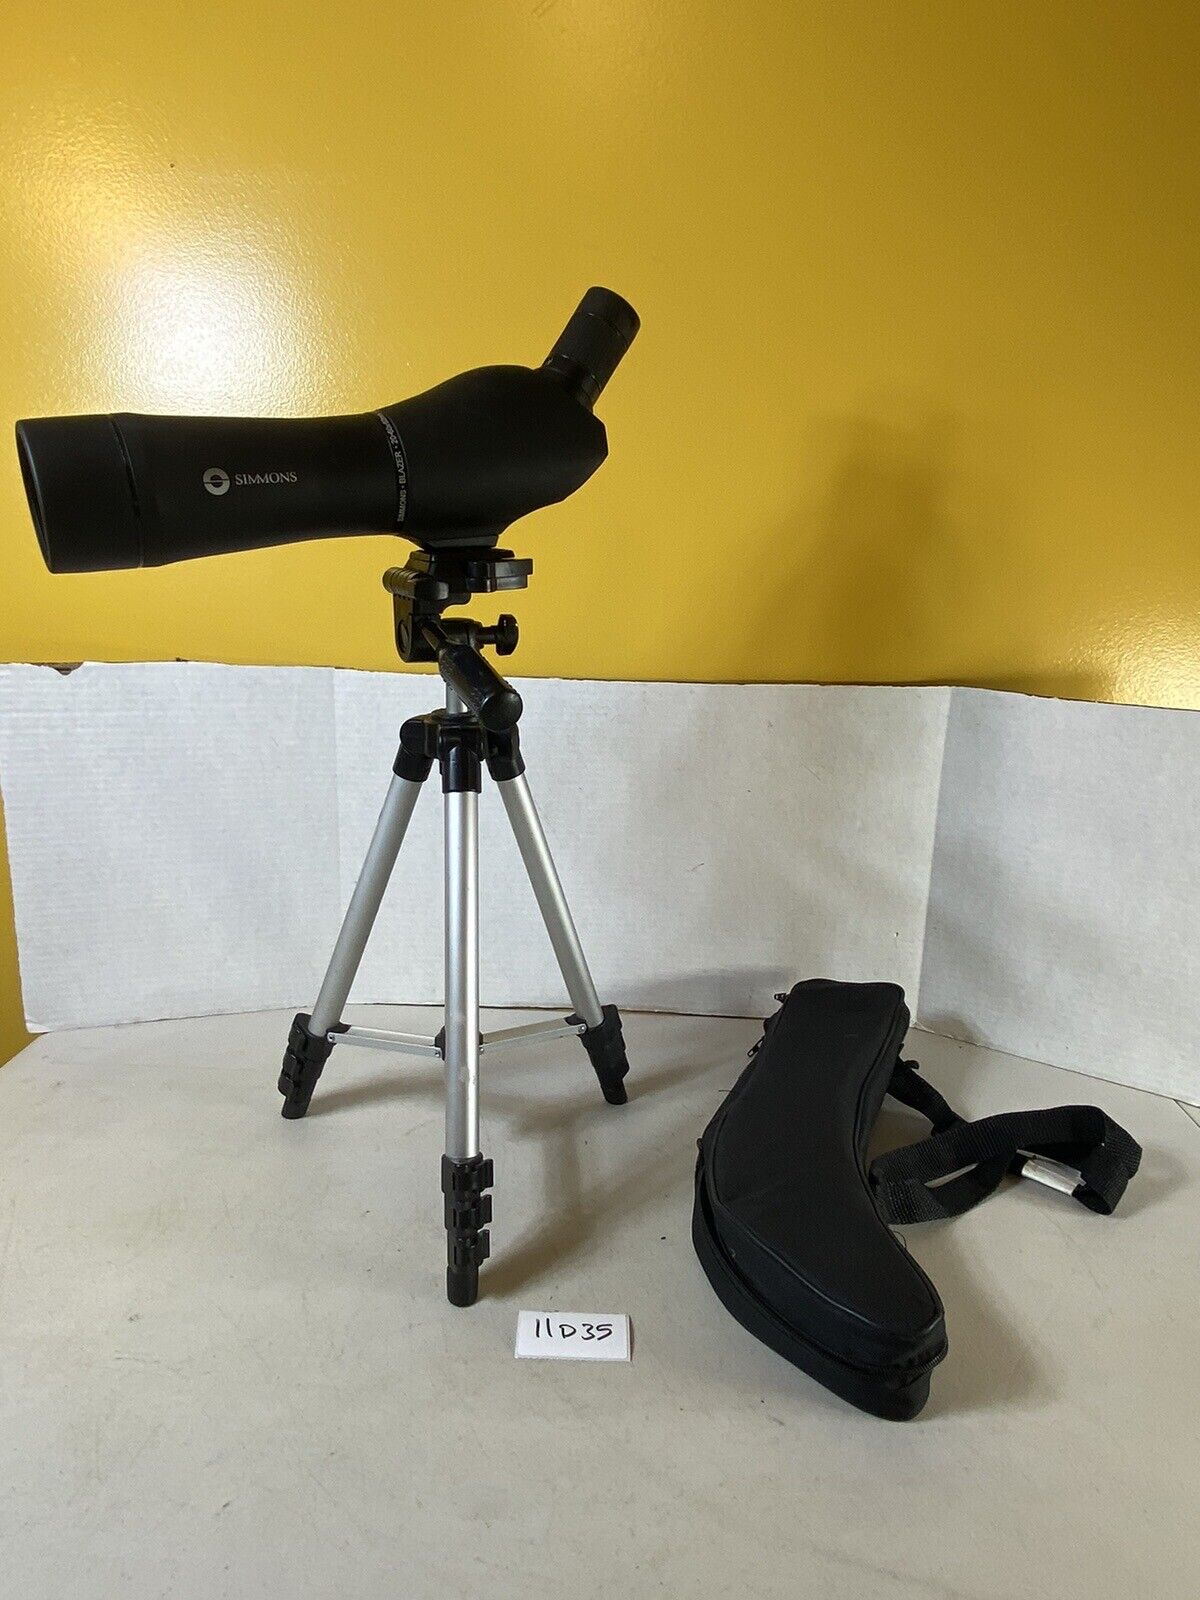 Simmons Blazer 20-60x60mm spotting scope tripod Stand & Bag 11D35